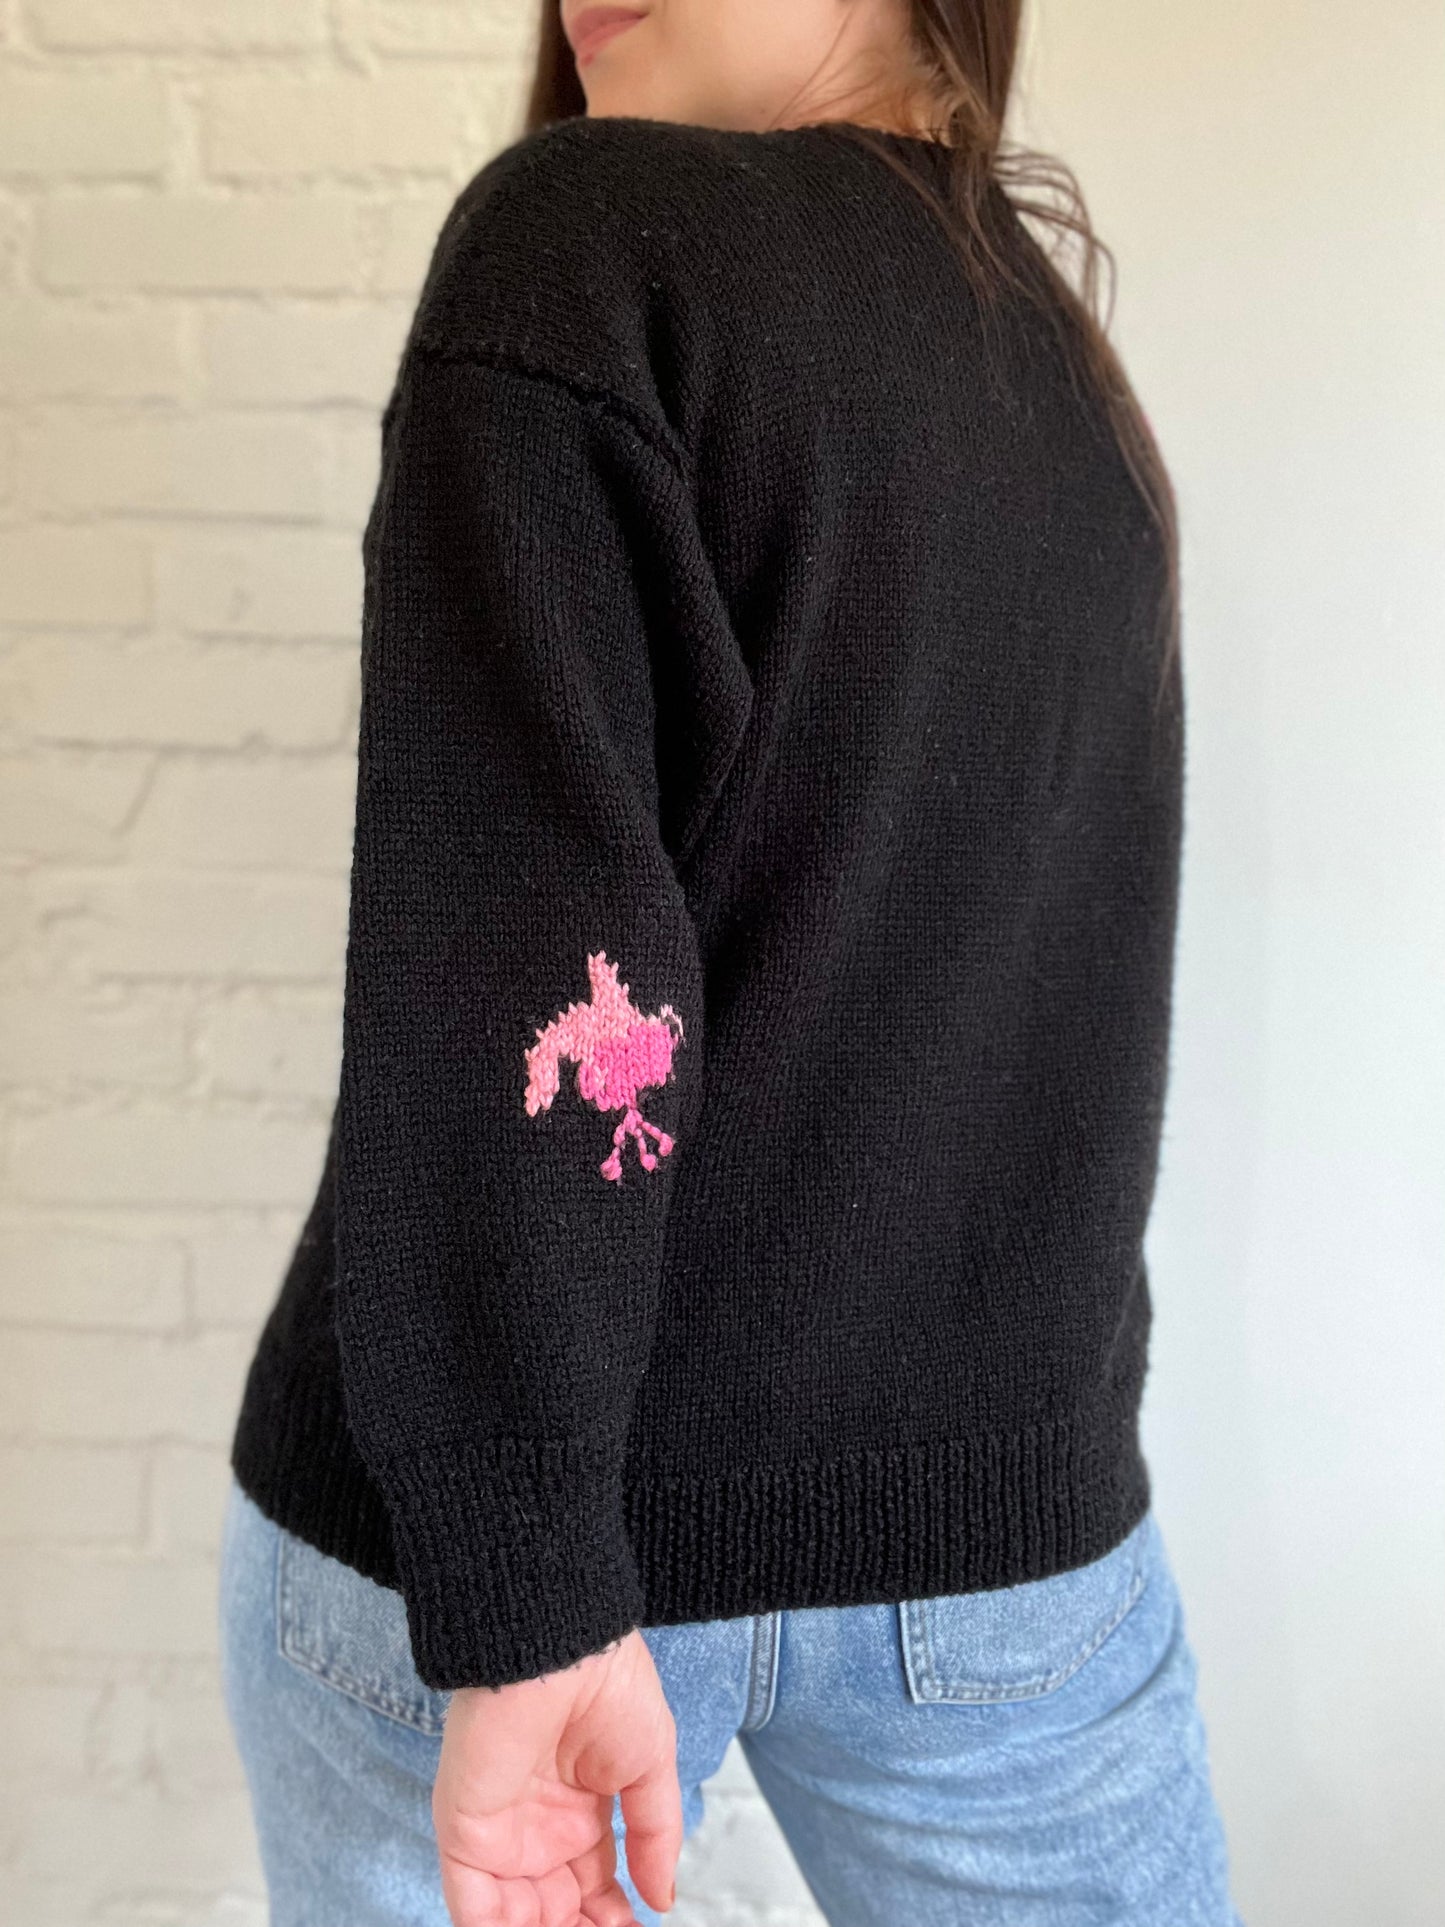 Hand Knit Black & Floral Sweater - Size L/XL